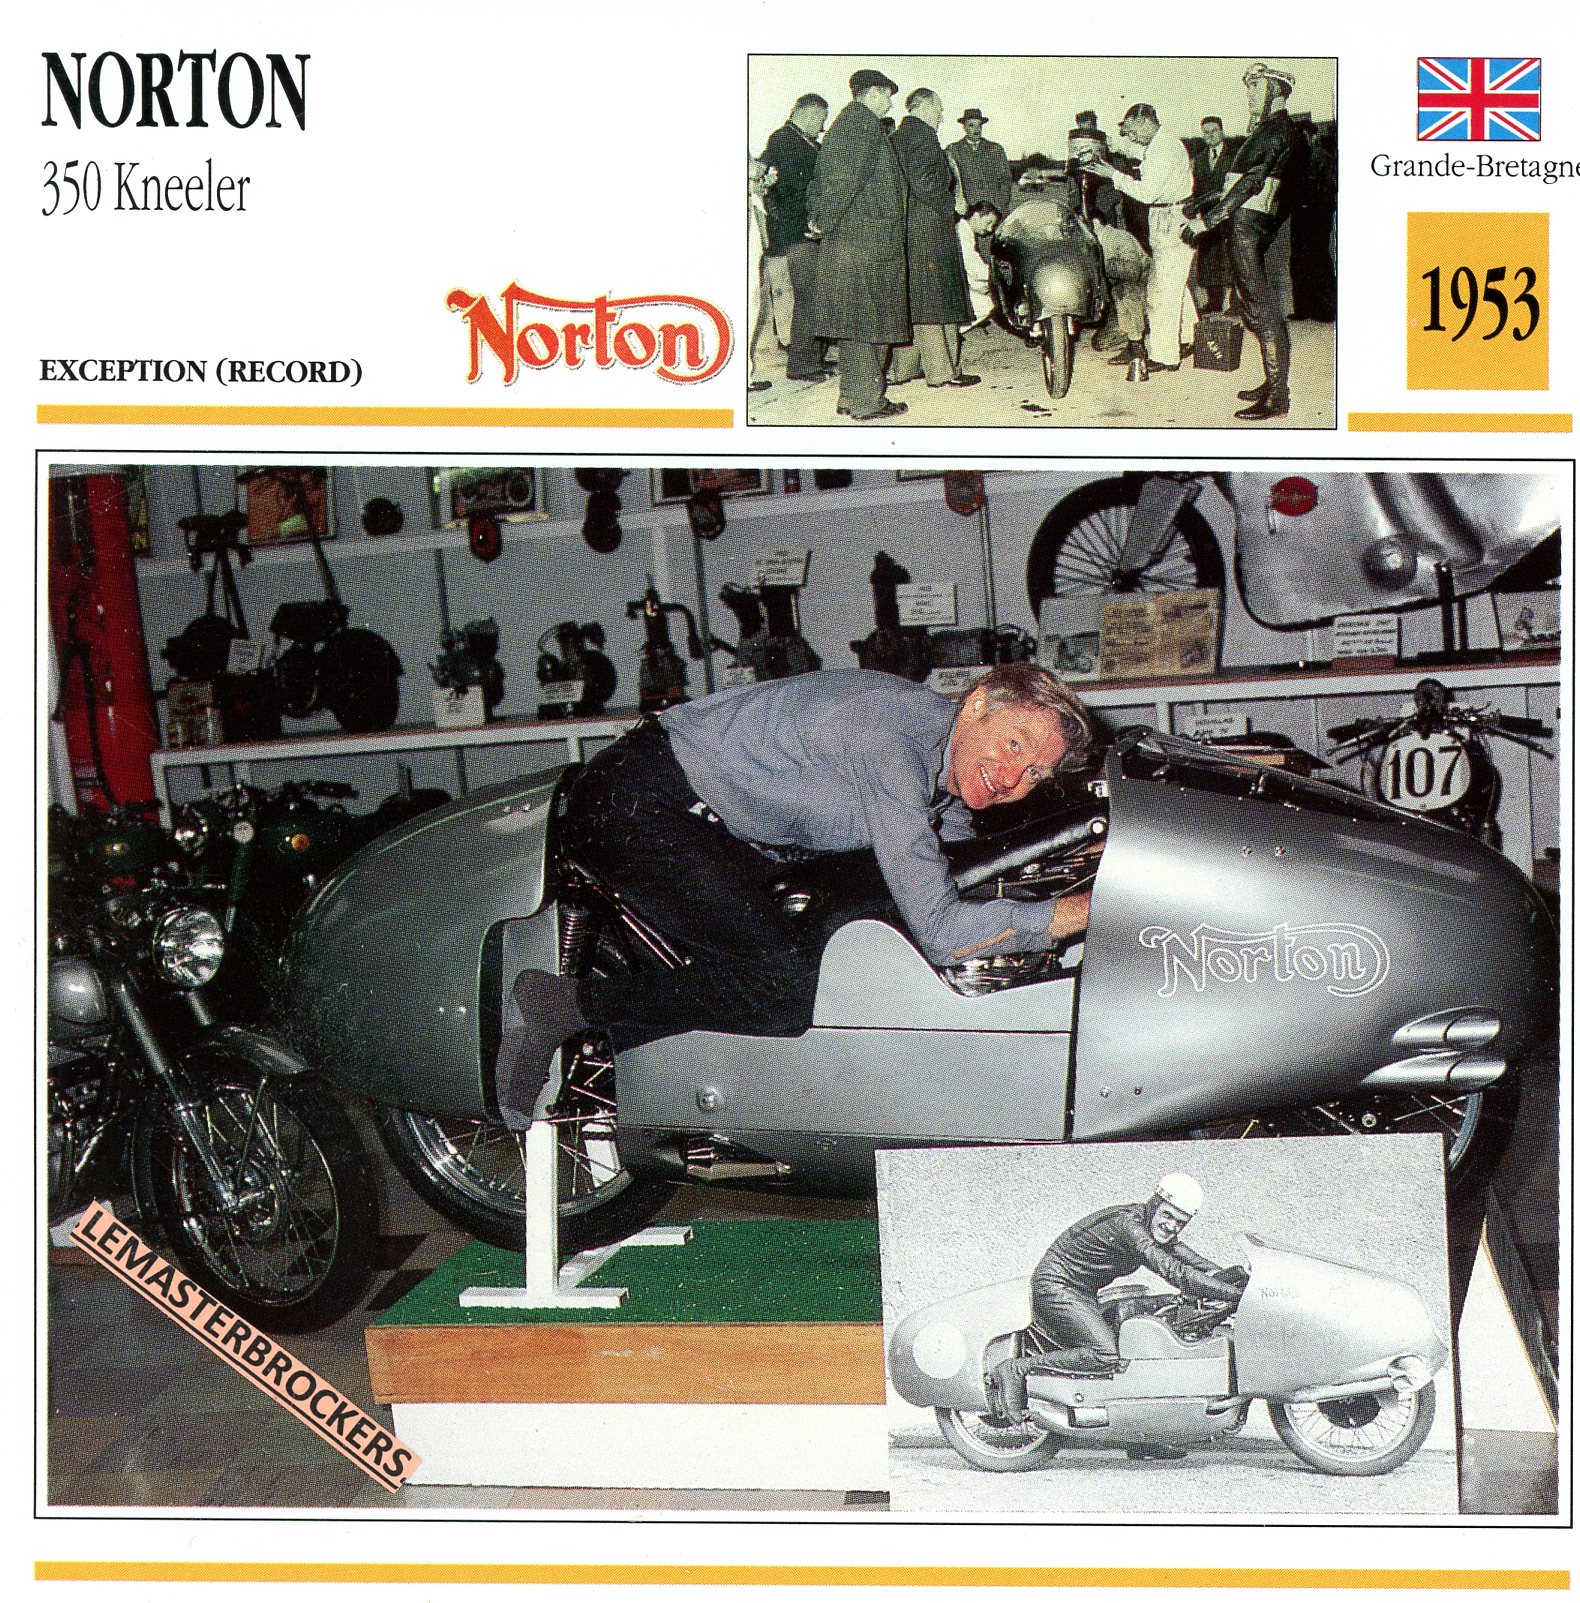 NORTON-350-KNEELER-1953-FICHE-MOTO-ATLAS-lemasterbrockers-CARD-MOTORCYCLE